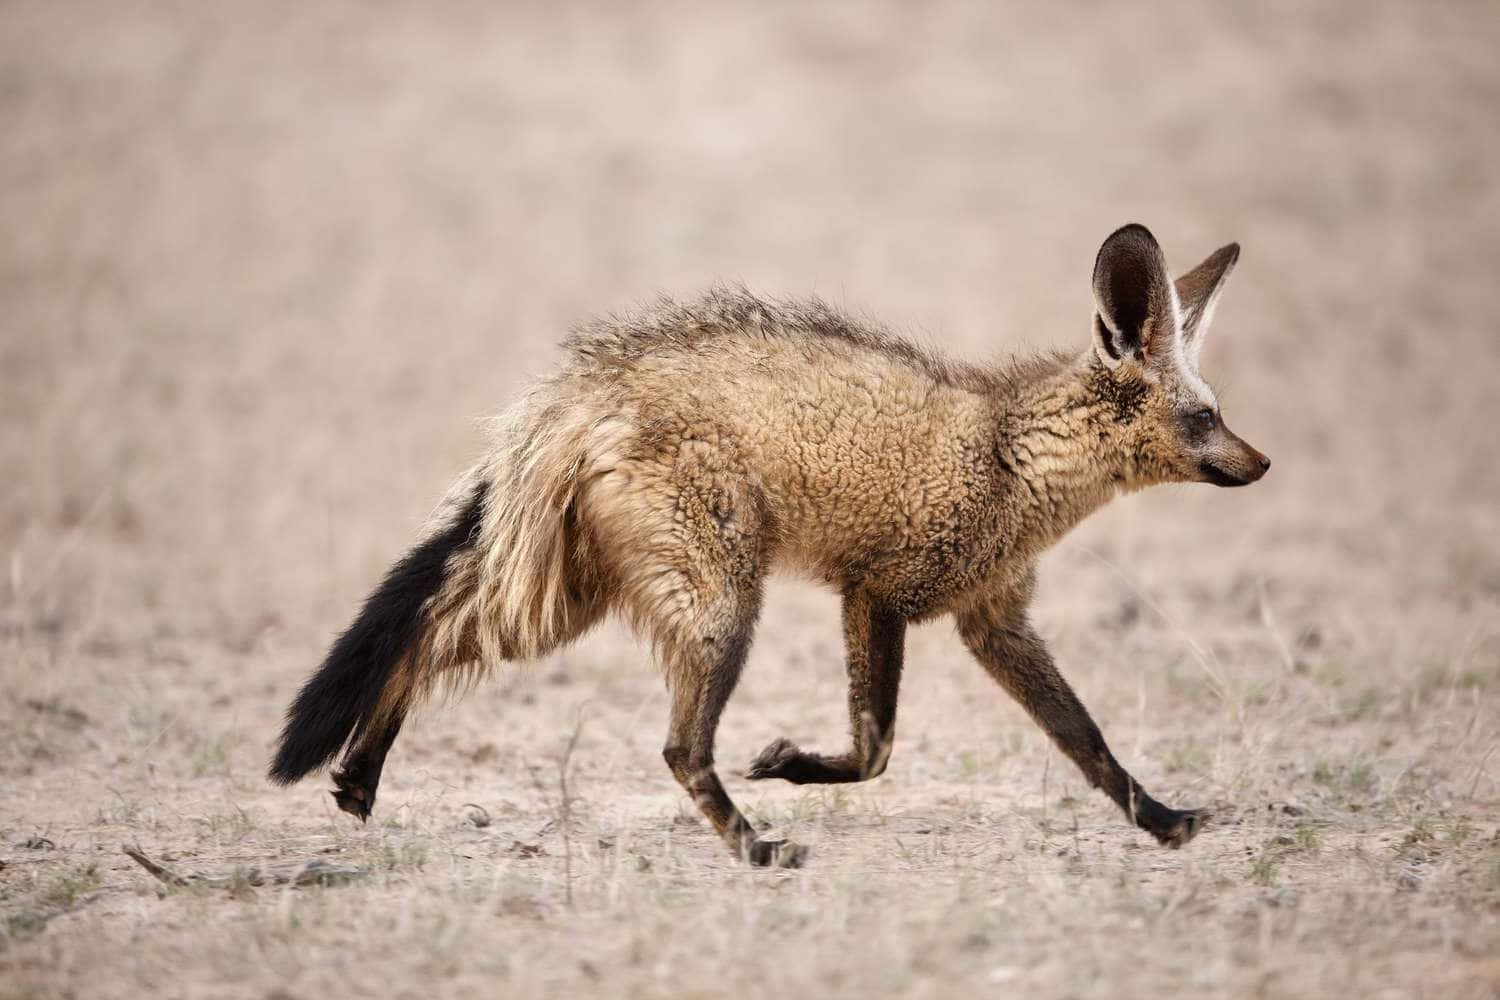 A Small Fox Walking Through A Dry Field